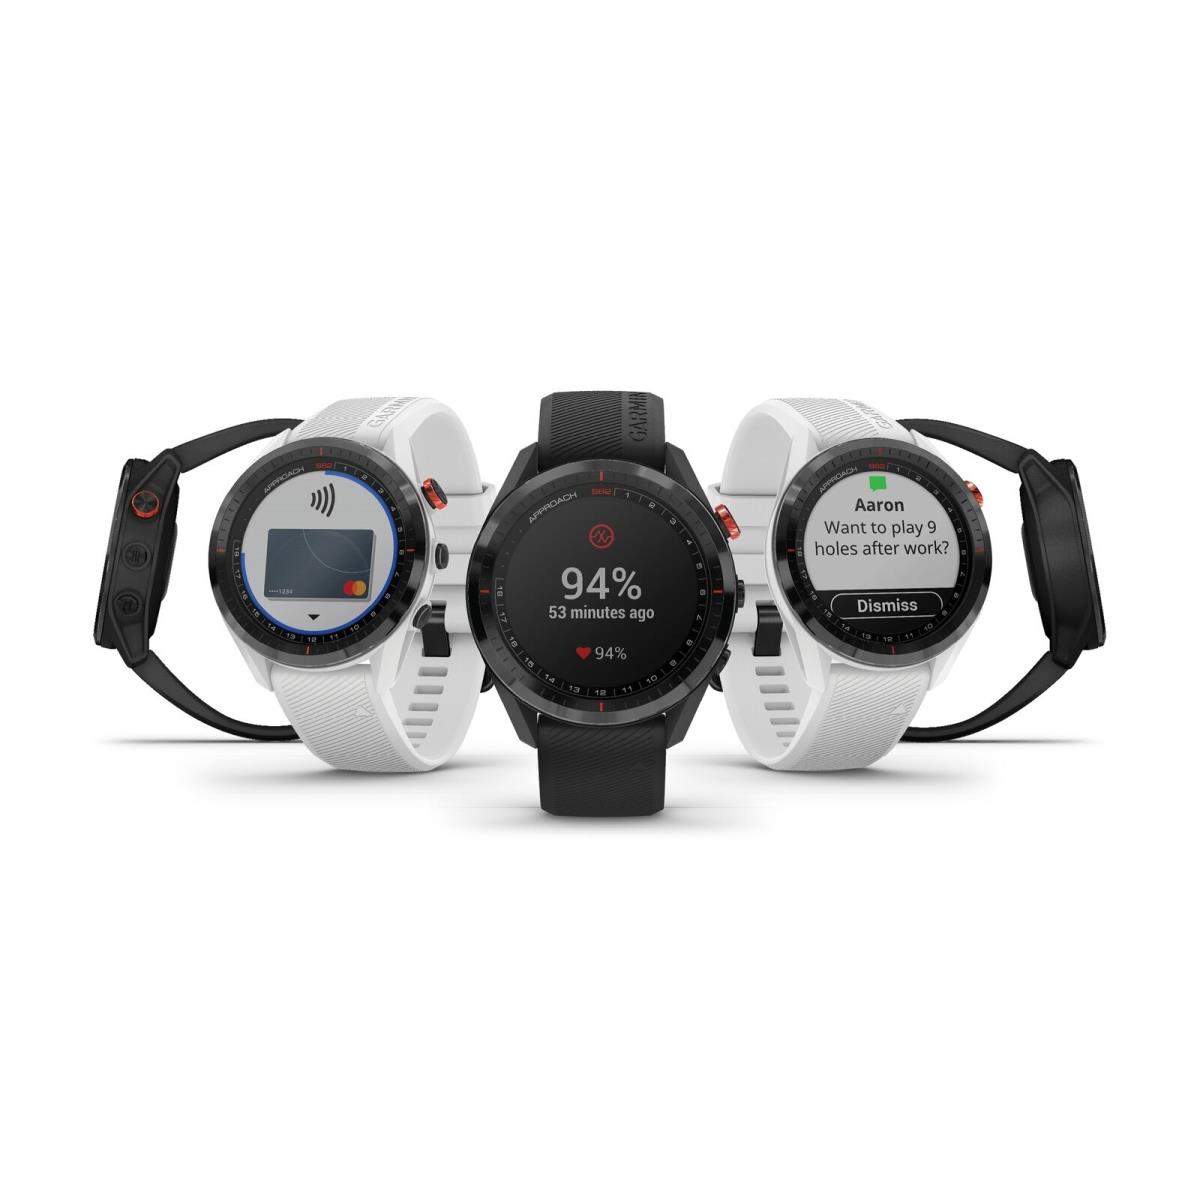 Garmin Approach S62 Golf Watch Built-in Virtual Caddie Full Color Screen